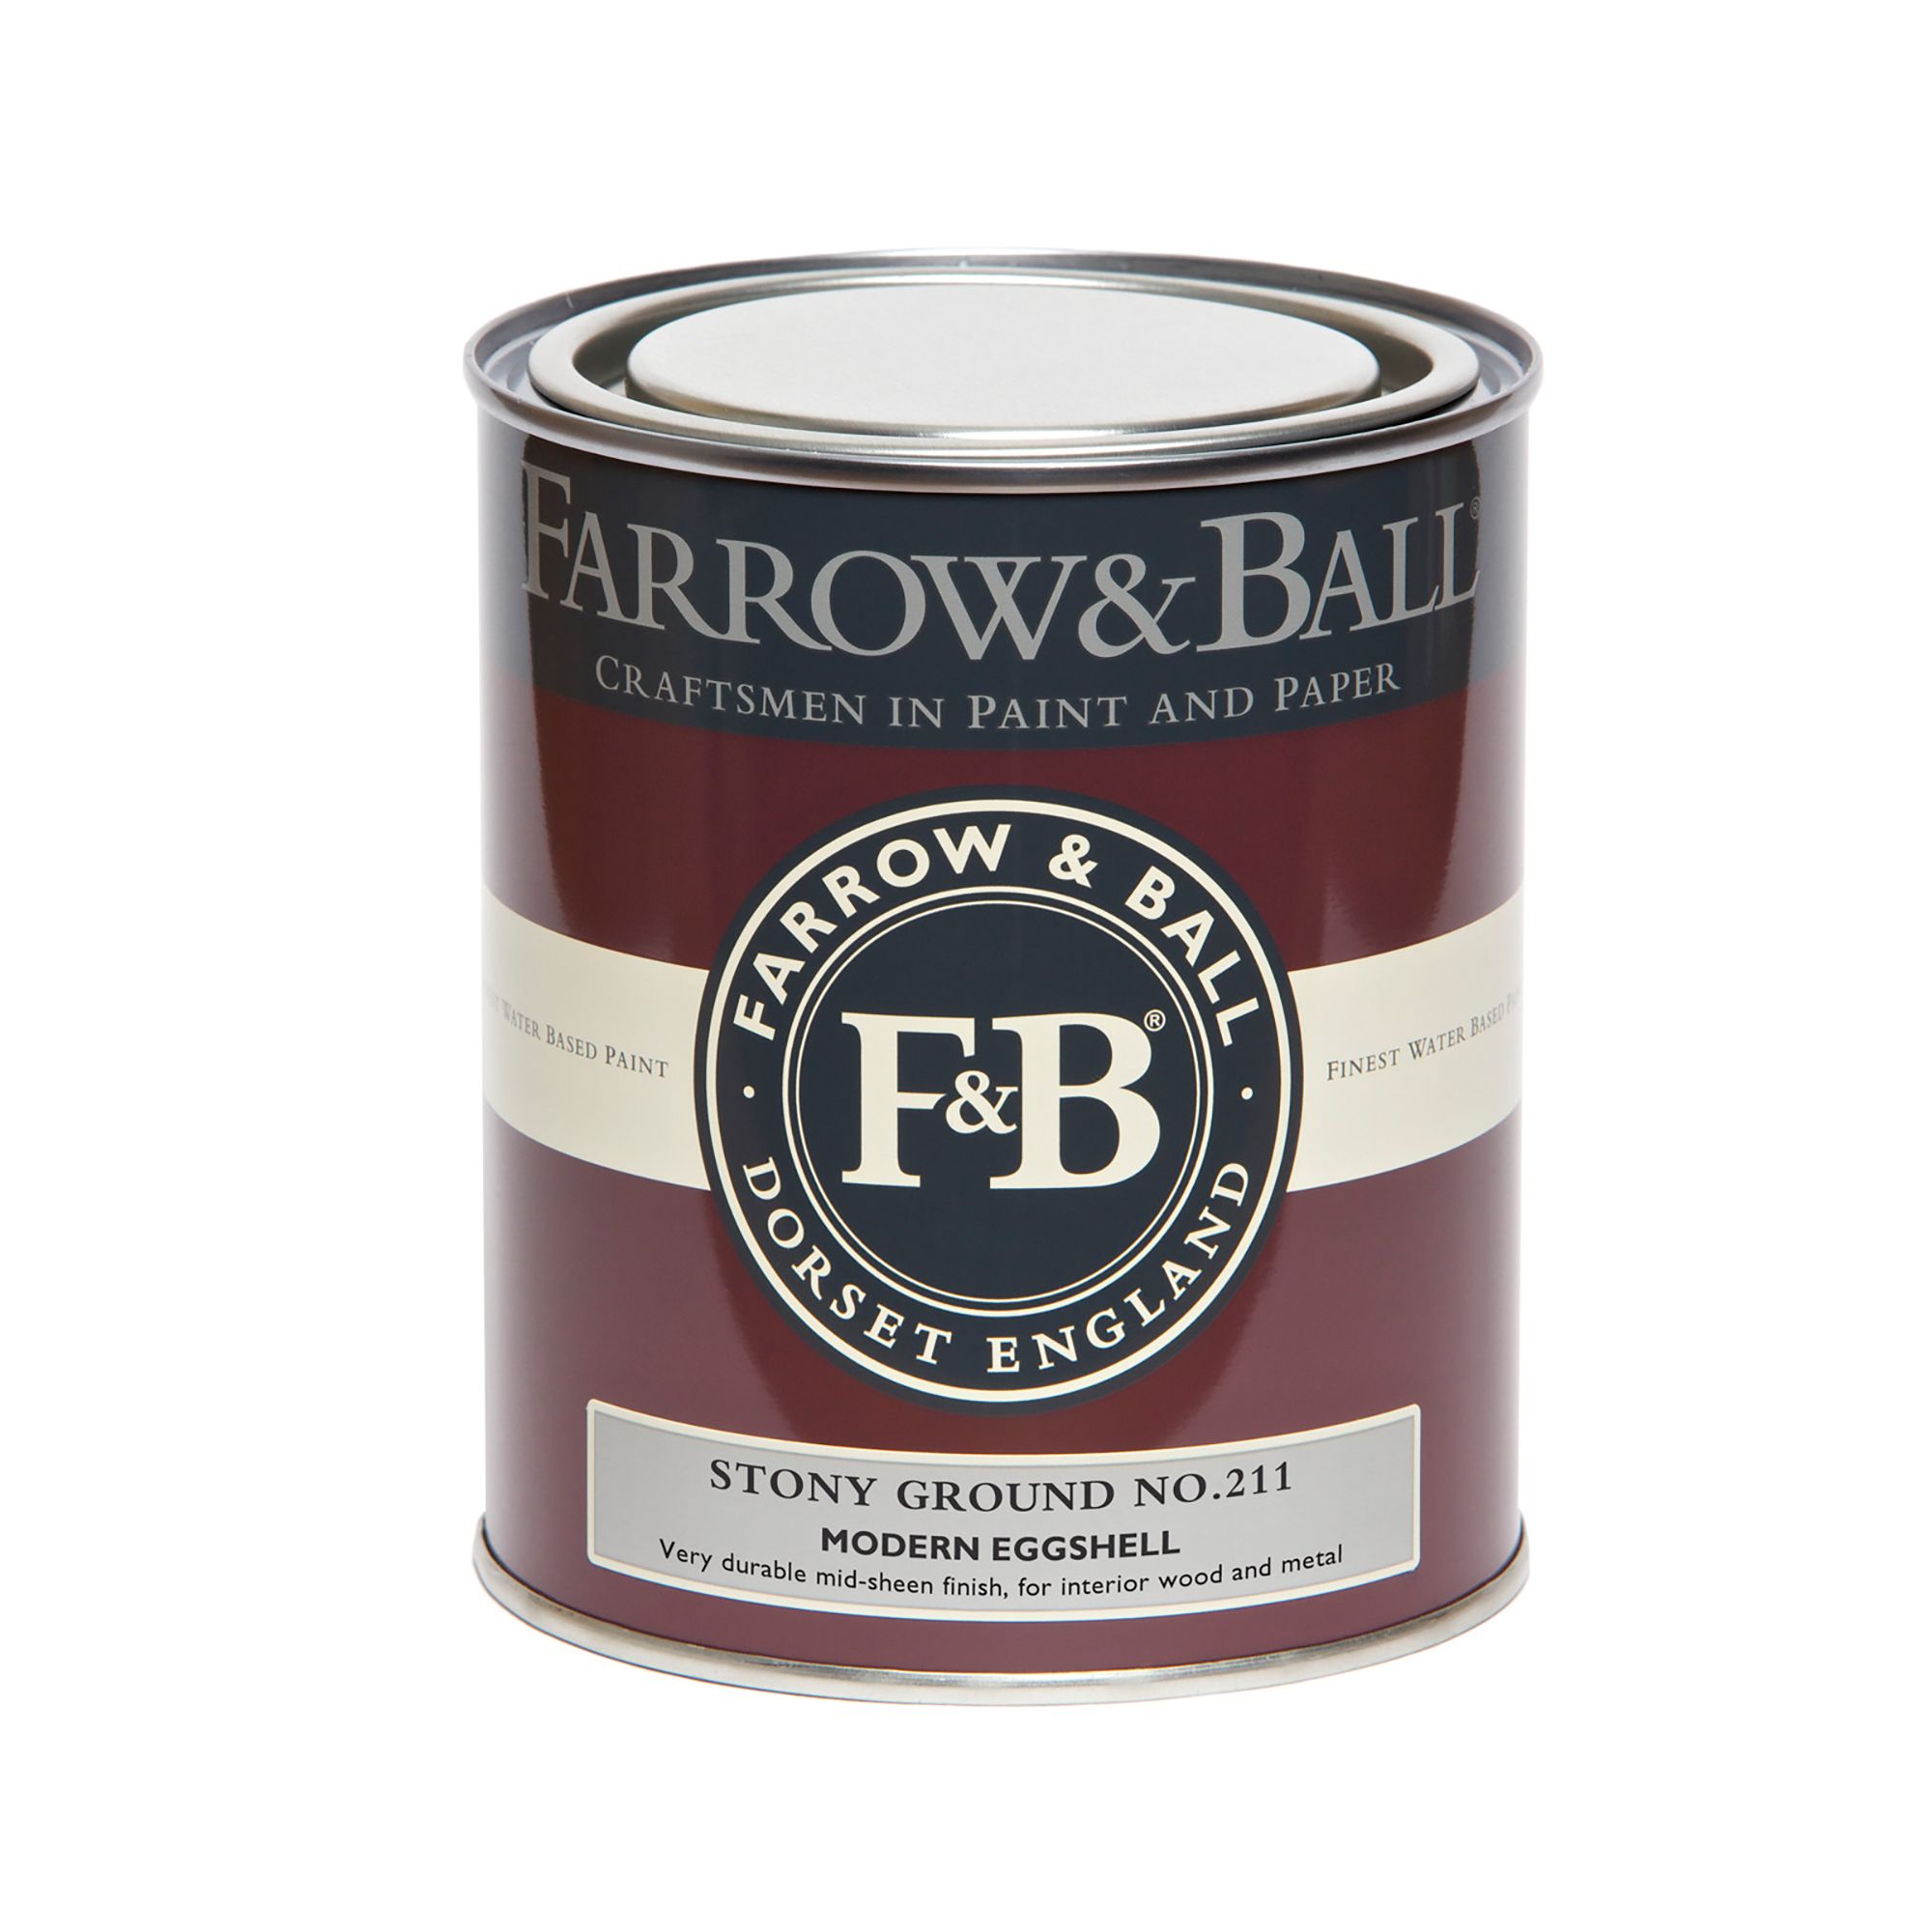 Farrow & Ball Modern Stony Ground No.211 Eggshell Paint, 750ml